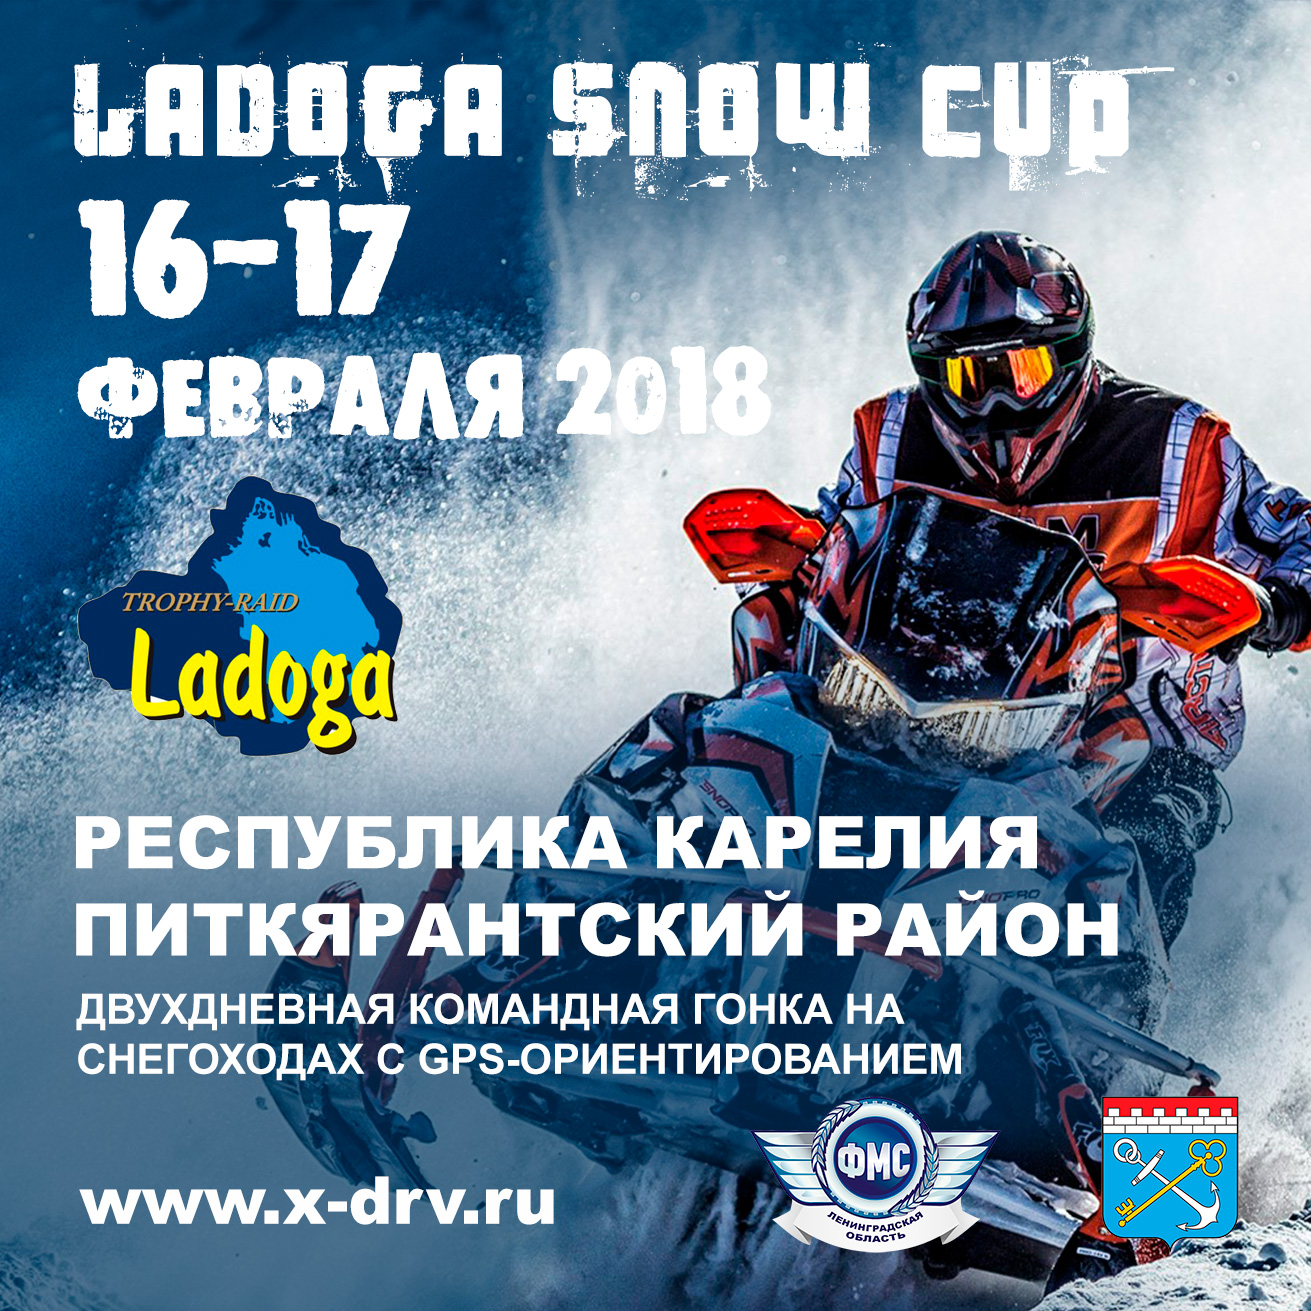 Ladoga Snow Cup 